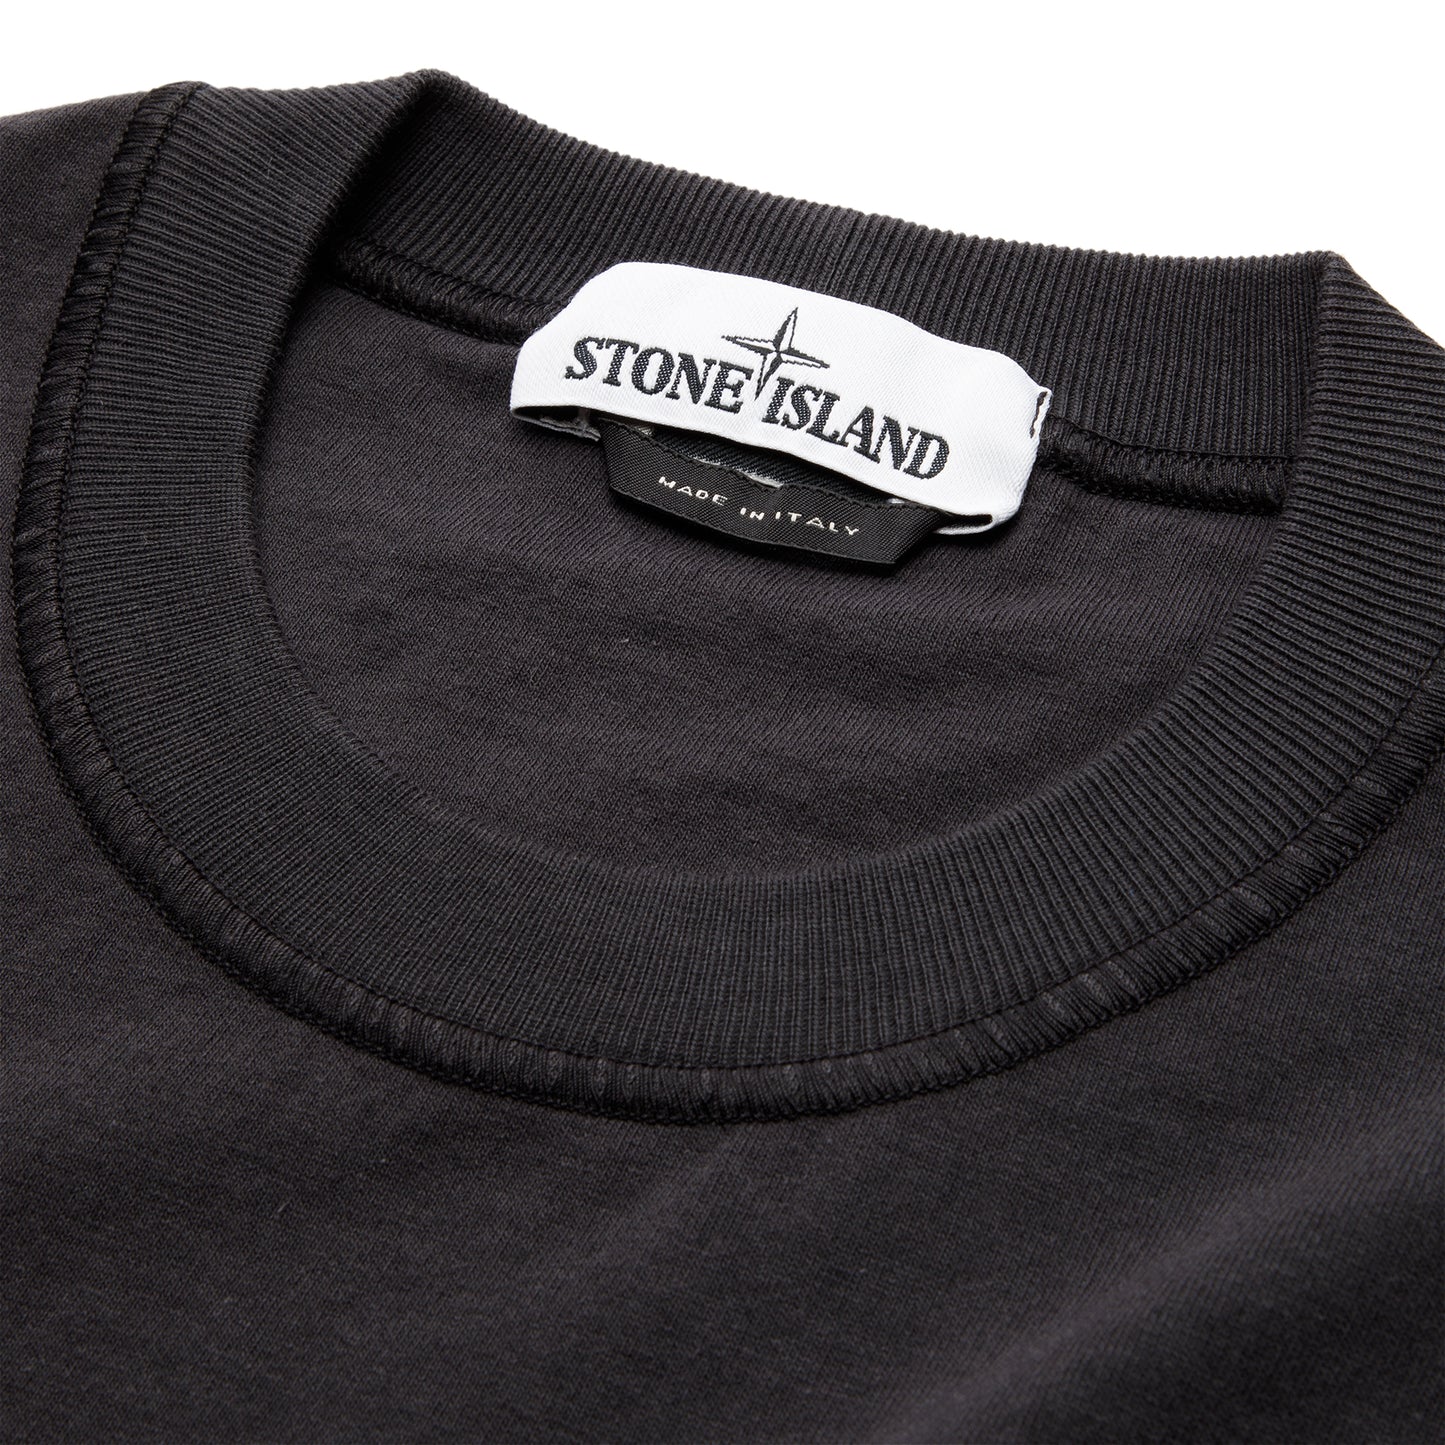 Stone Island T-Shirt (Charcoal)